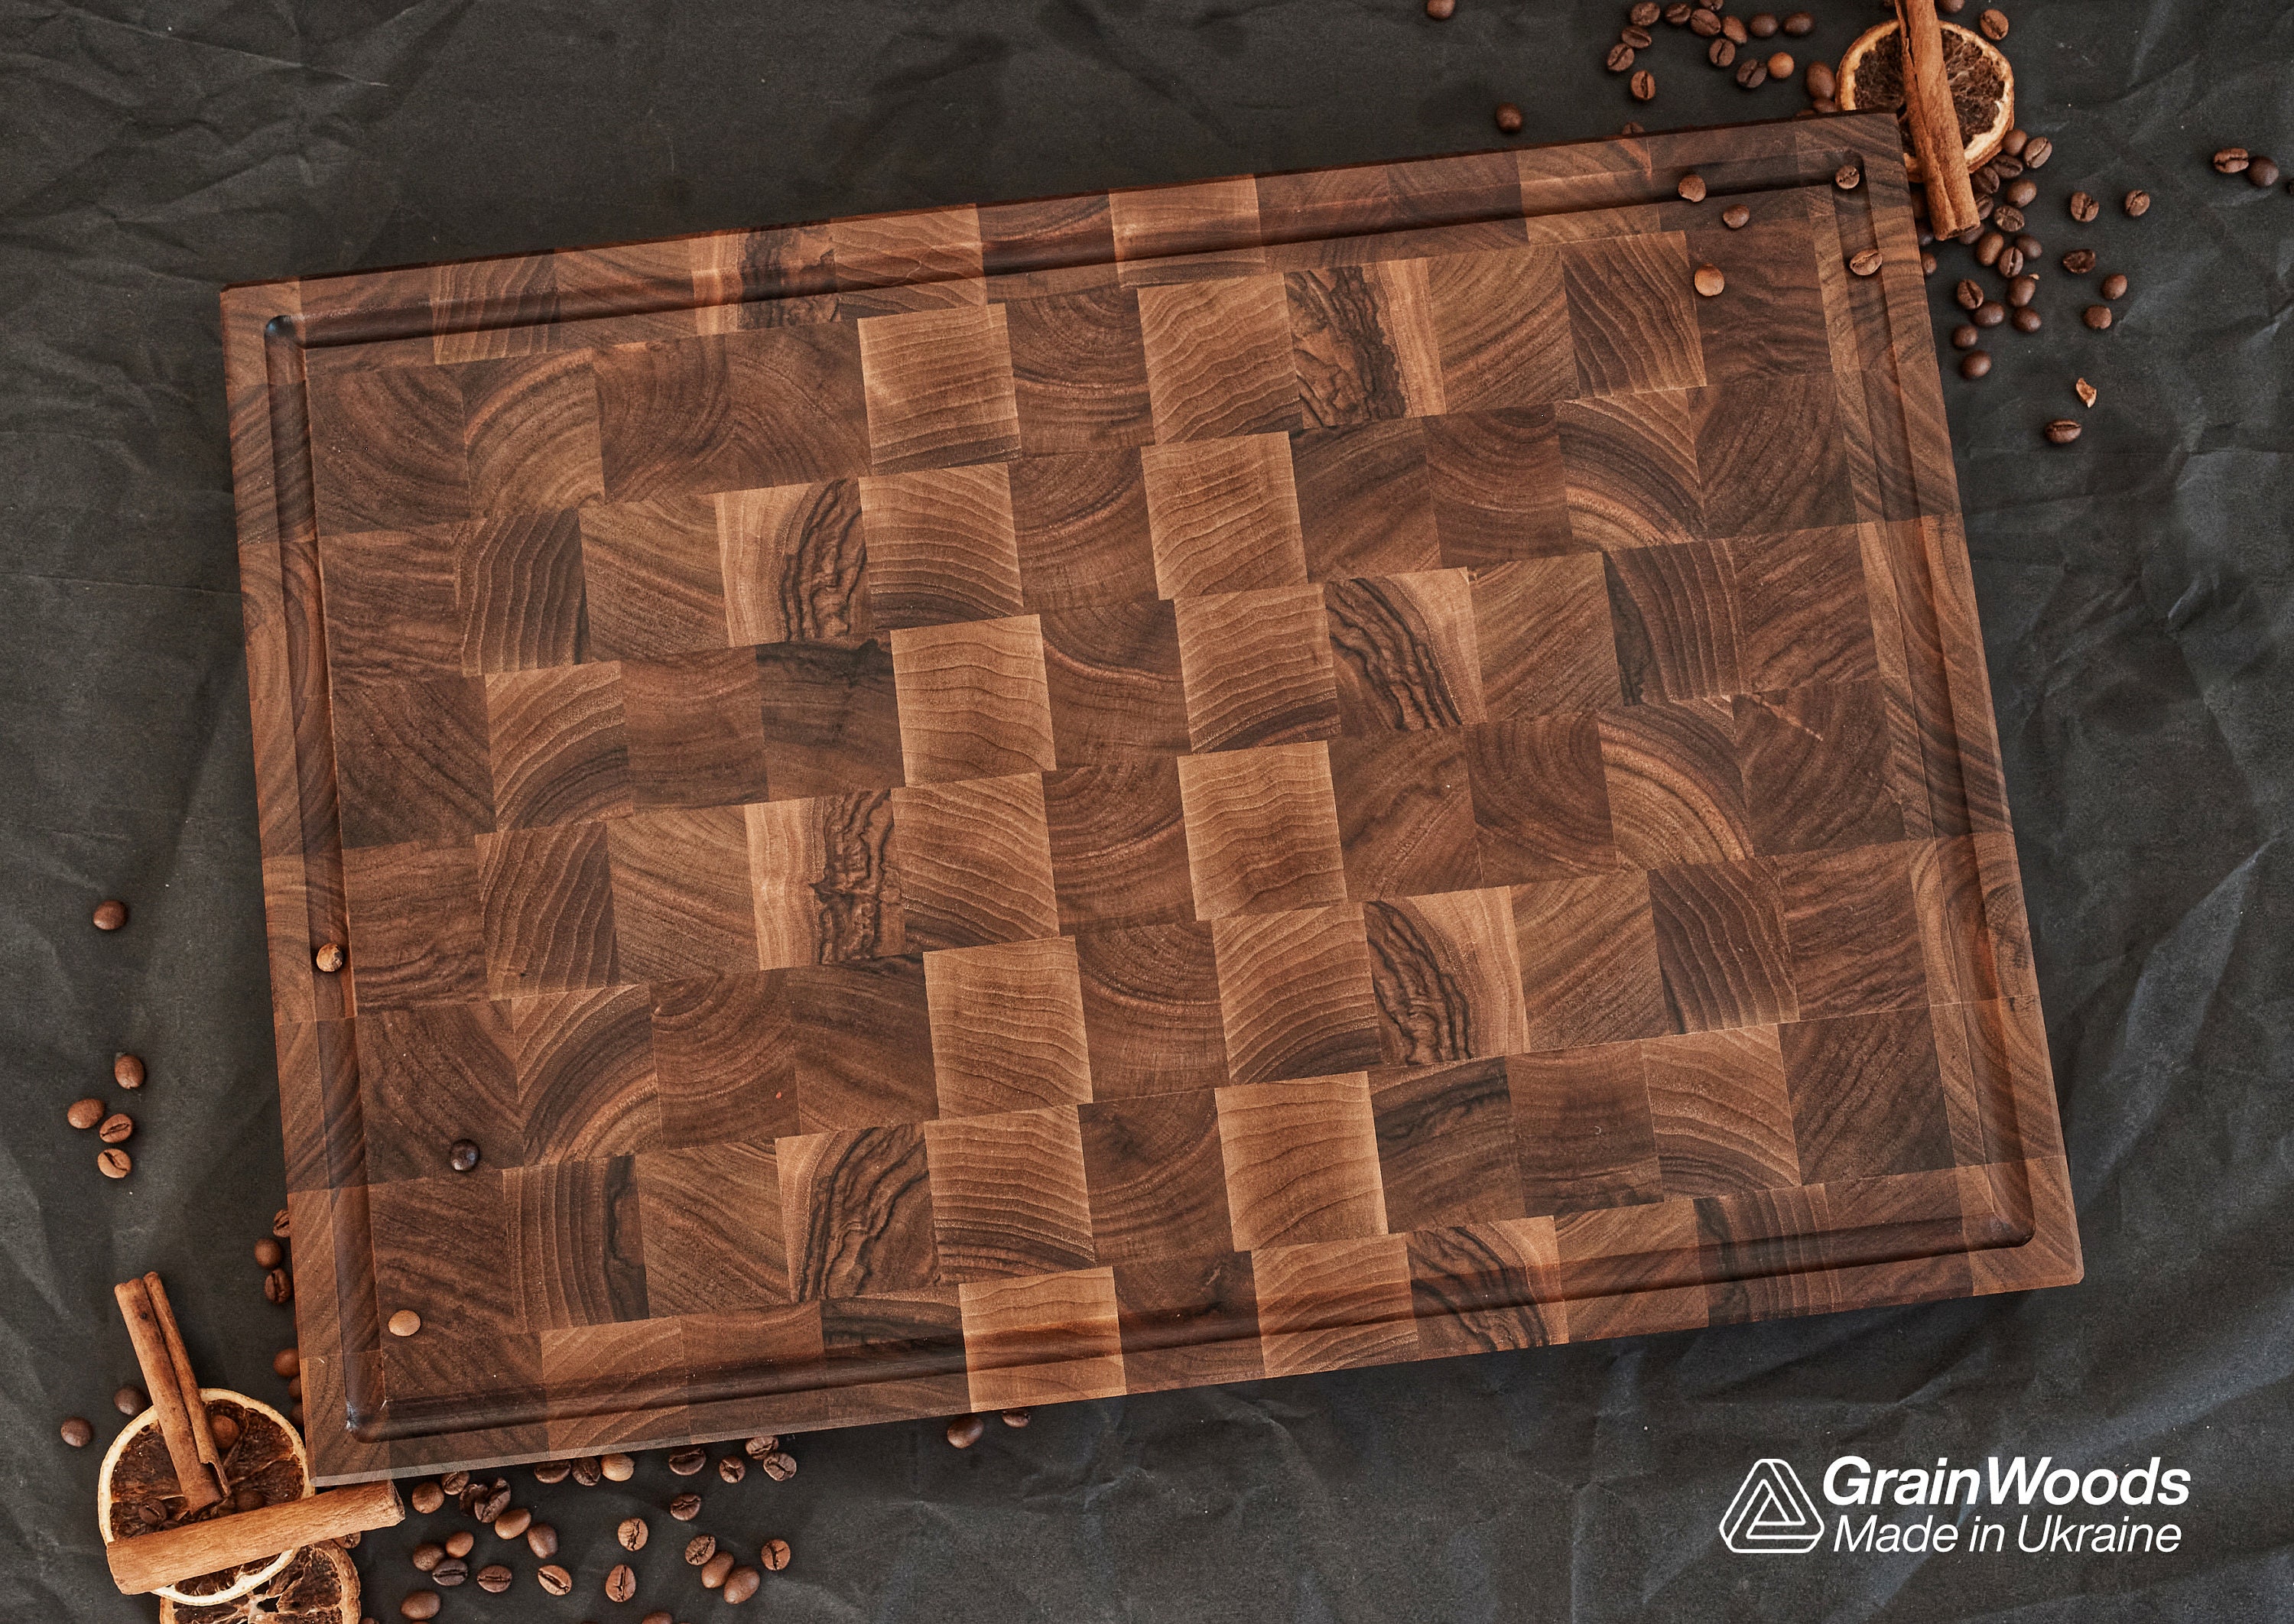 Daddy Chef End Grain Cutting Board - Wood butcher block 16x12x1.5  REVERSIBLE - Kitchen Wooden chopping board(include feet)